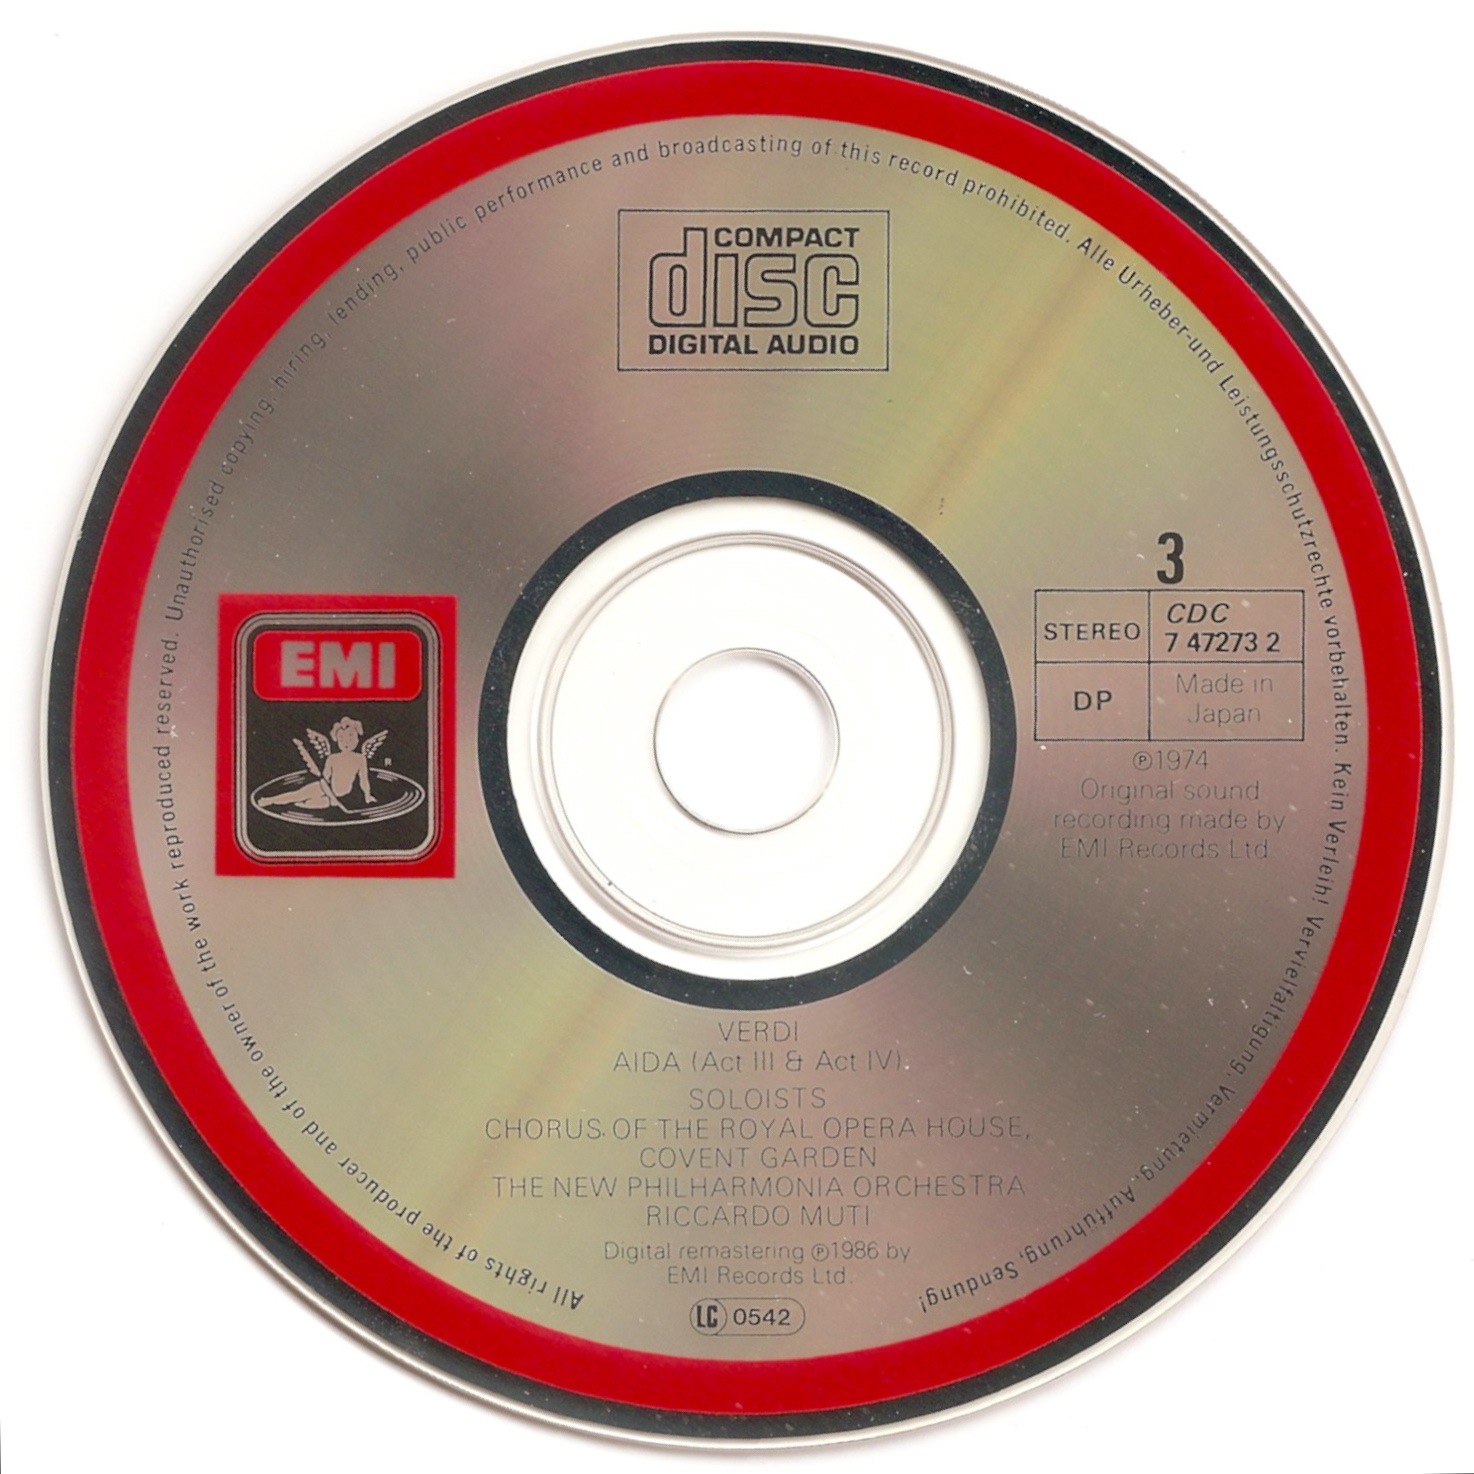 The First Pressing CD Collection: Giuseppe Verdi - Aida